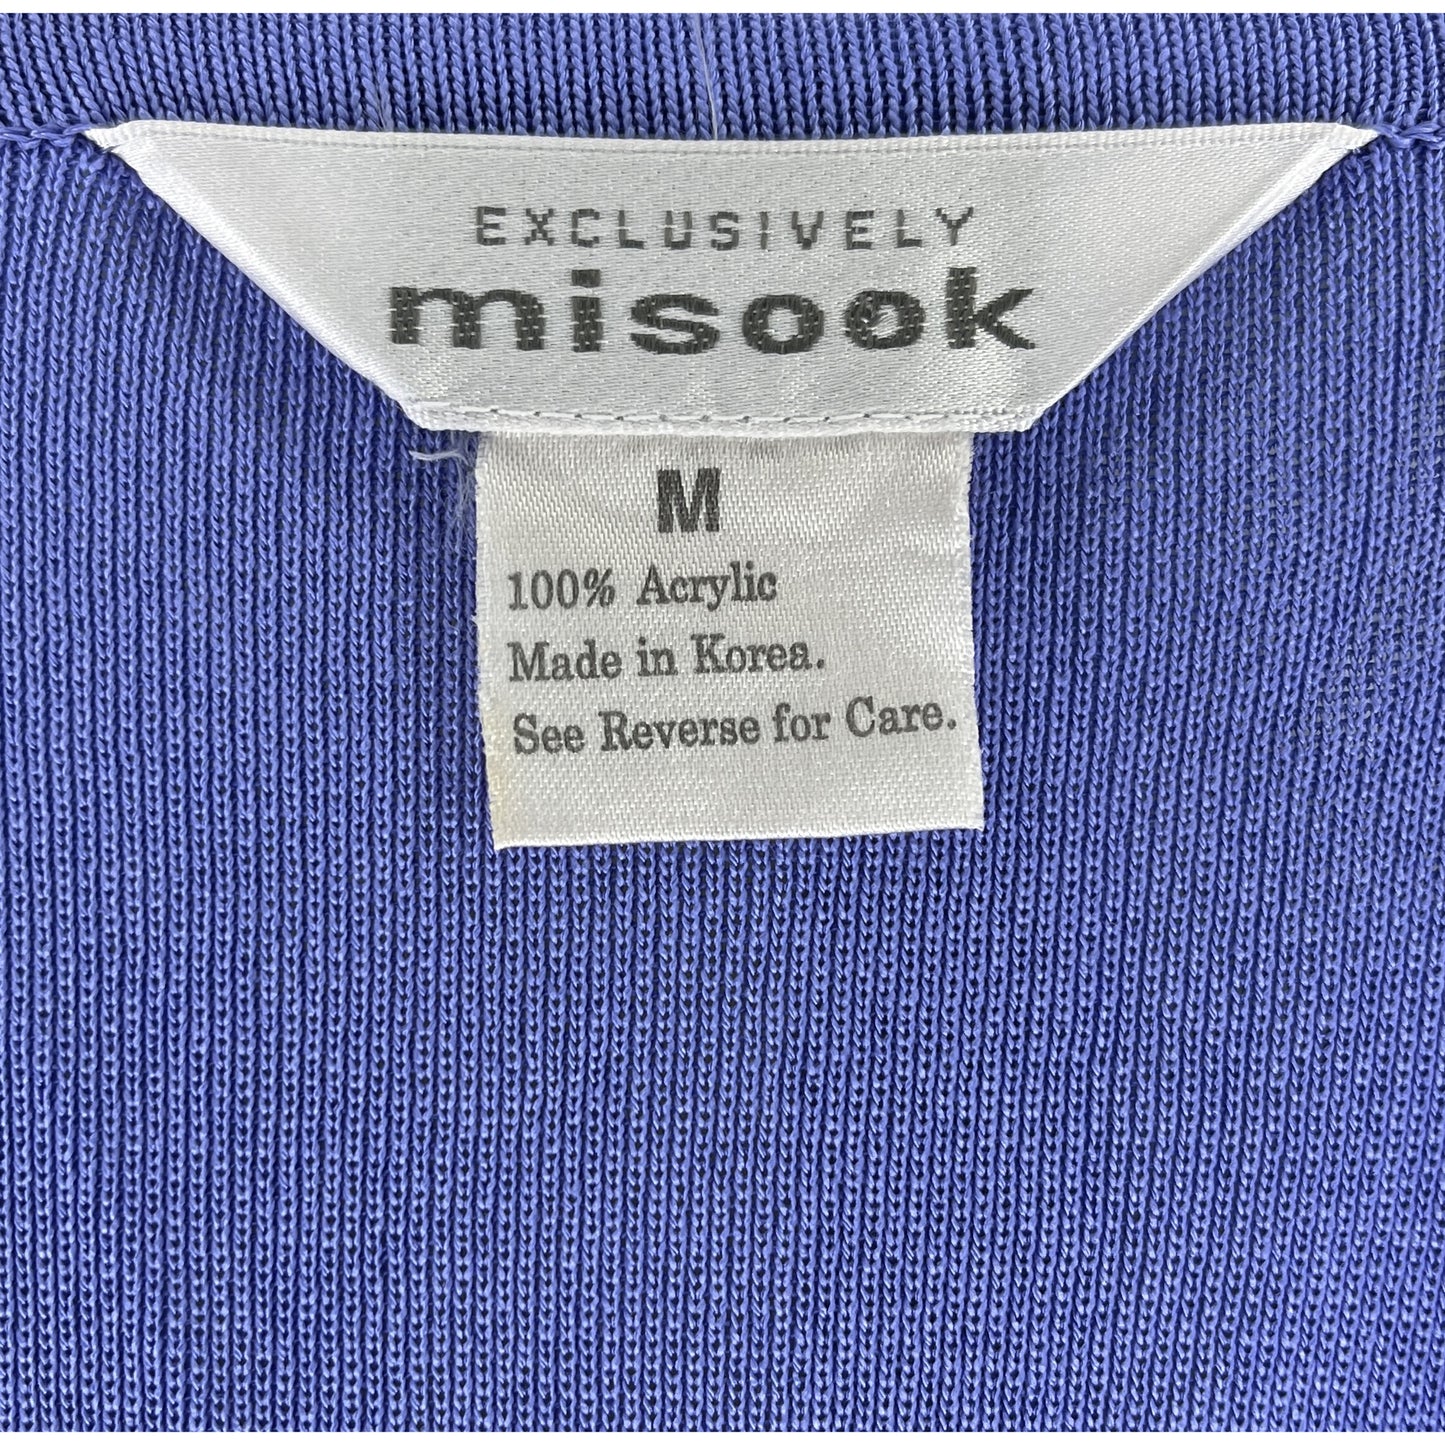 Mislook Dress & Cardigan Set Size M SKU 000412